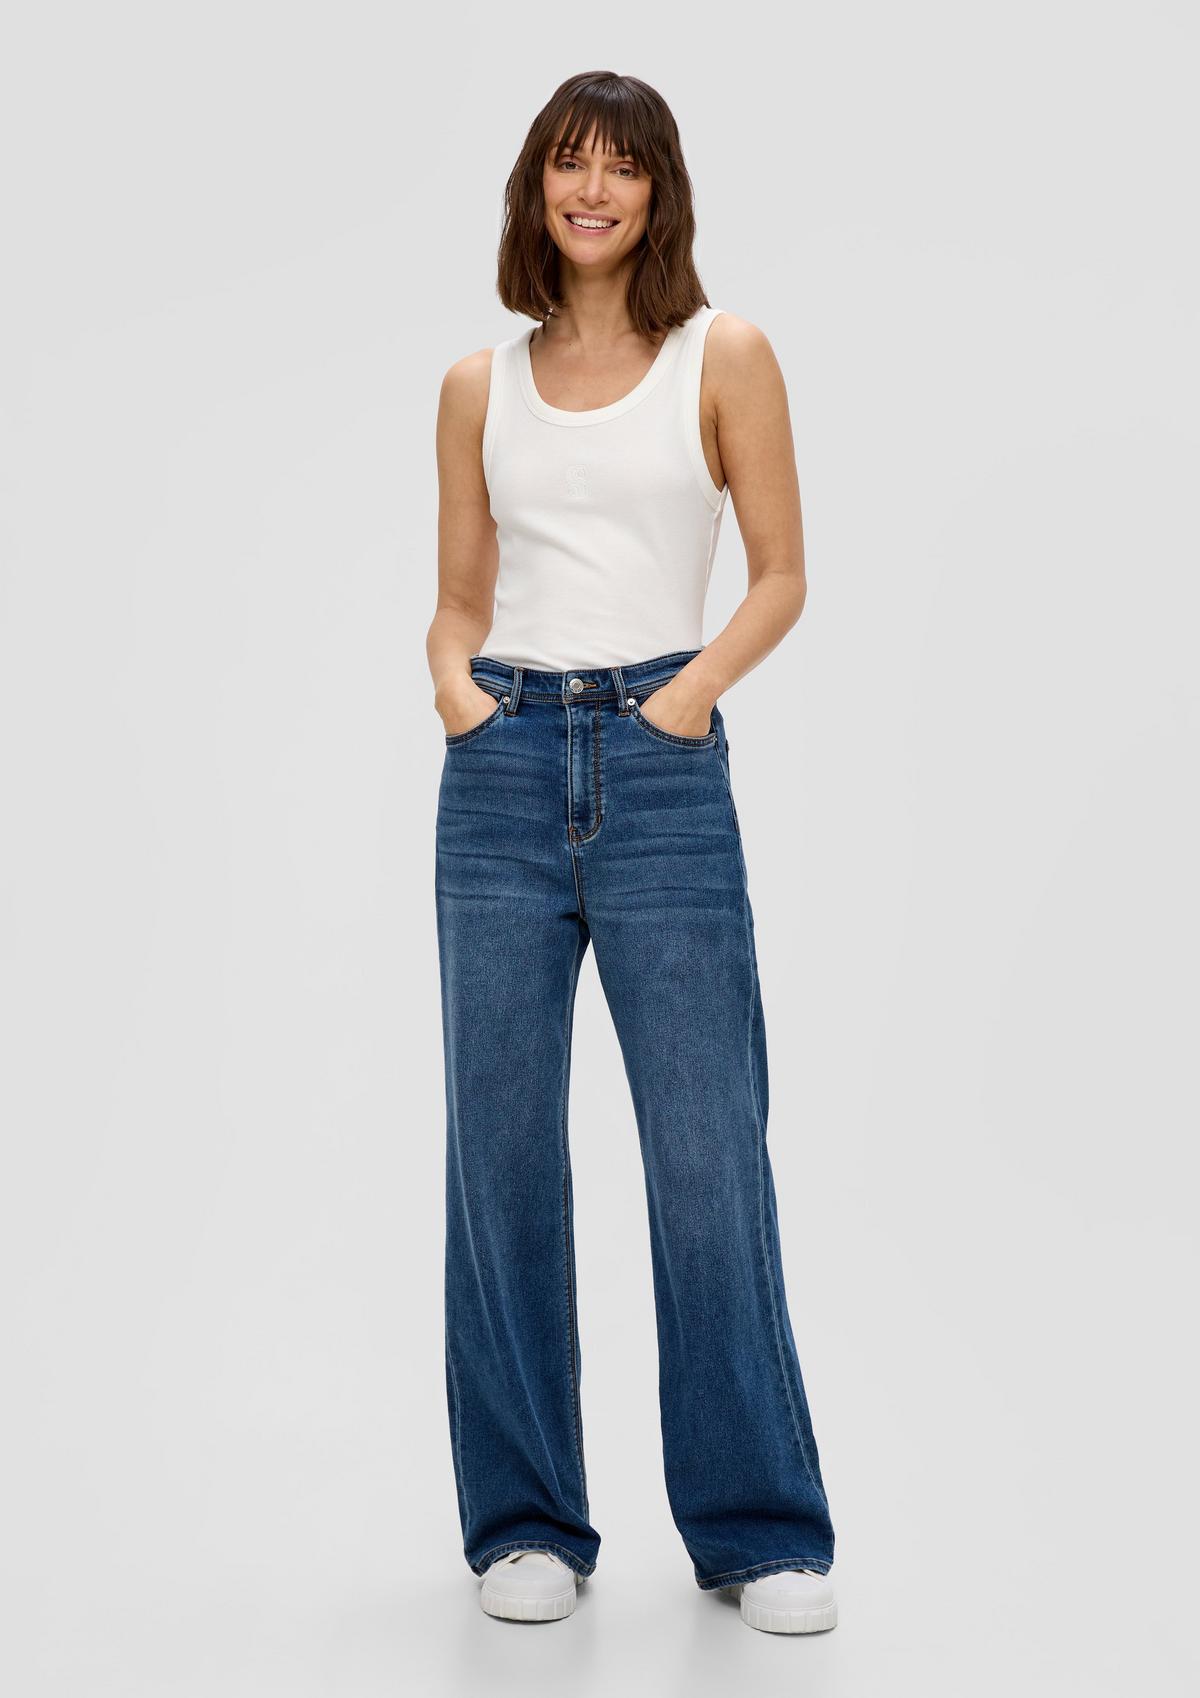 Suri jeans / regular fit / high rise / wide leg / katoenmix